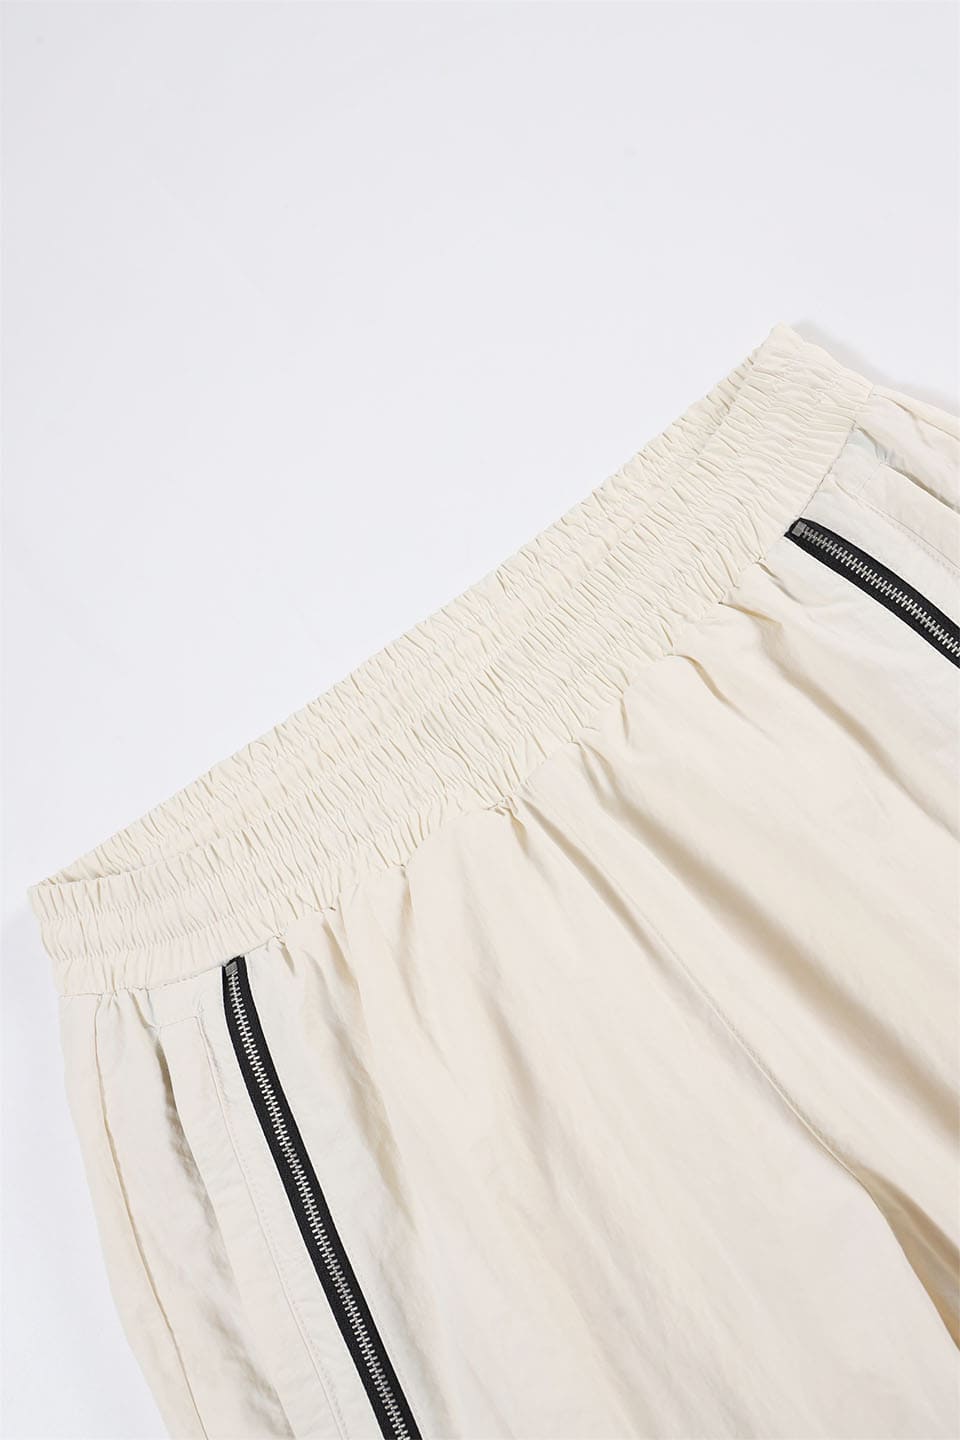 Cream Tonal Zip Track Pants